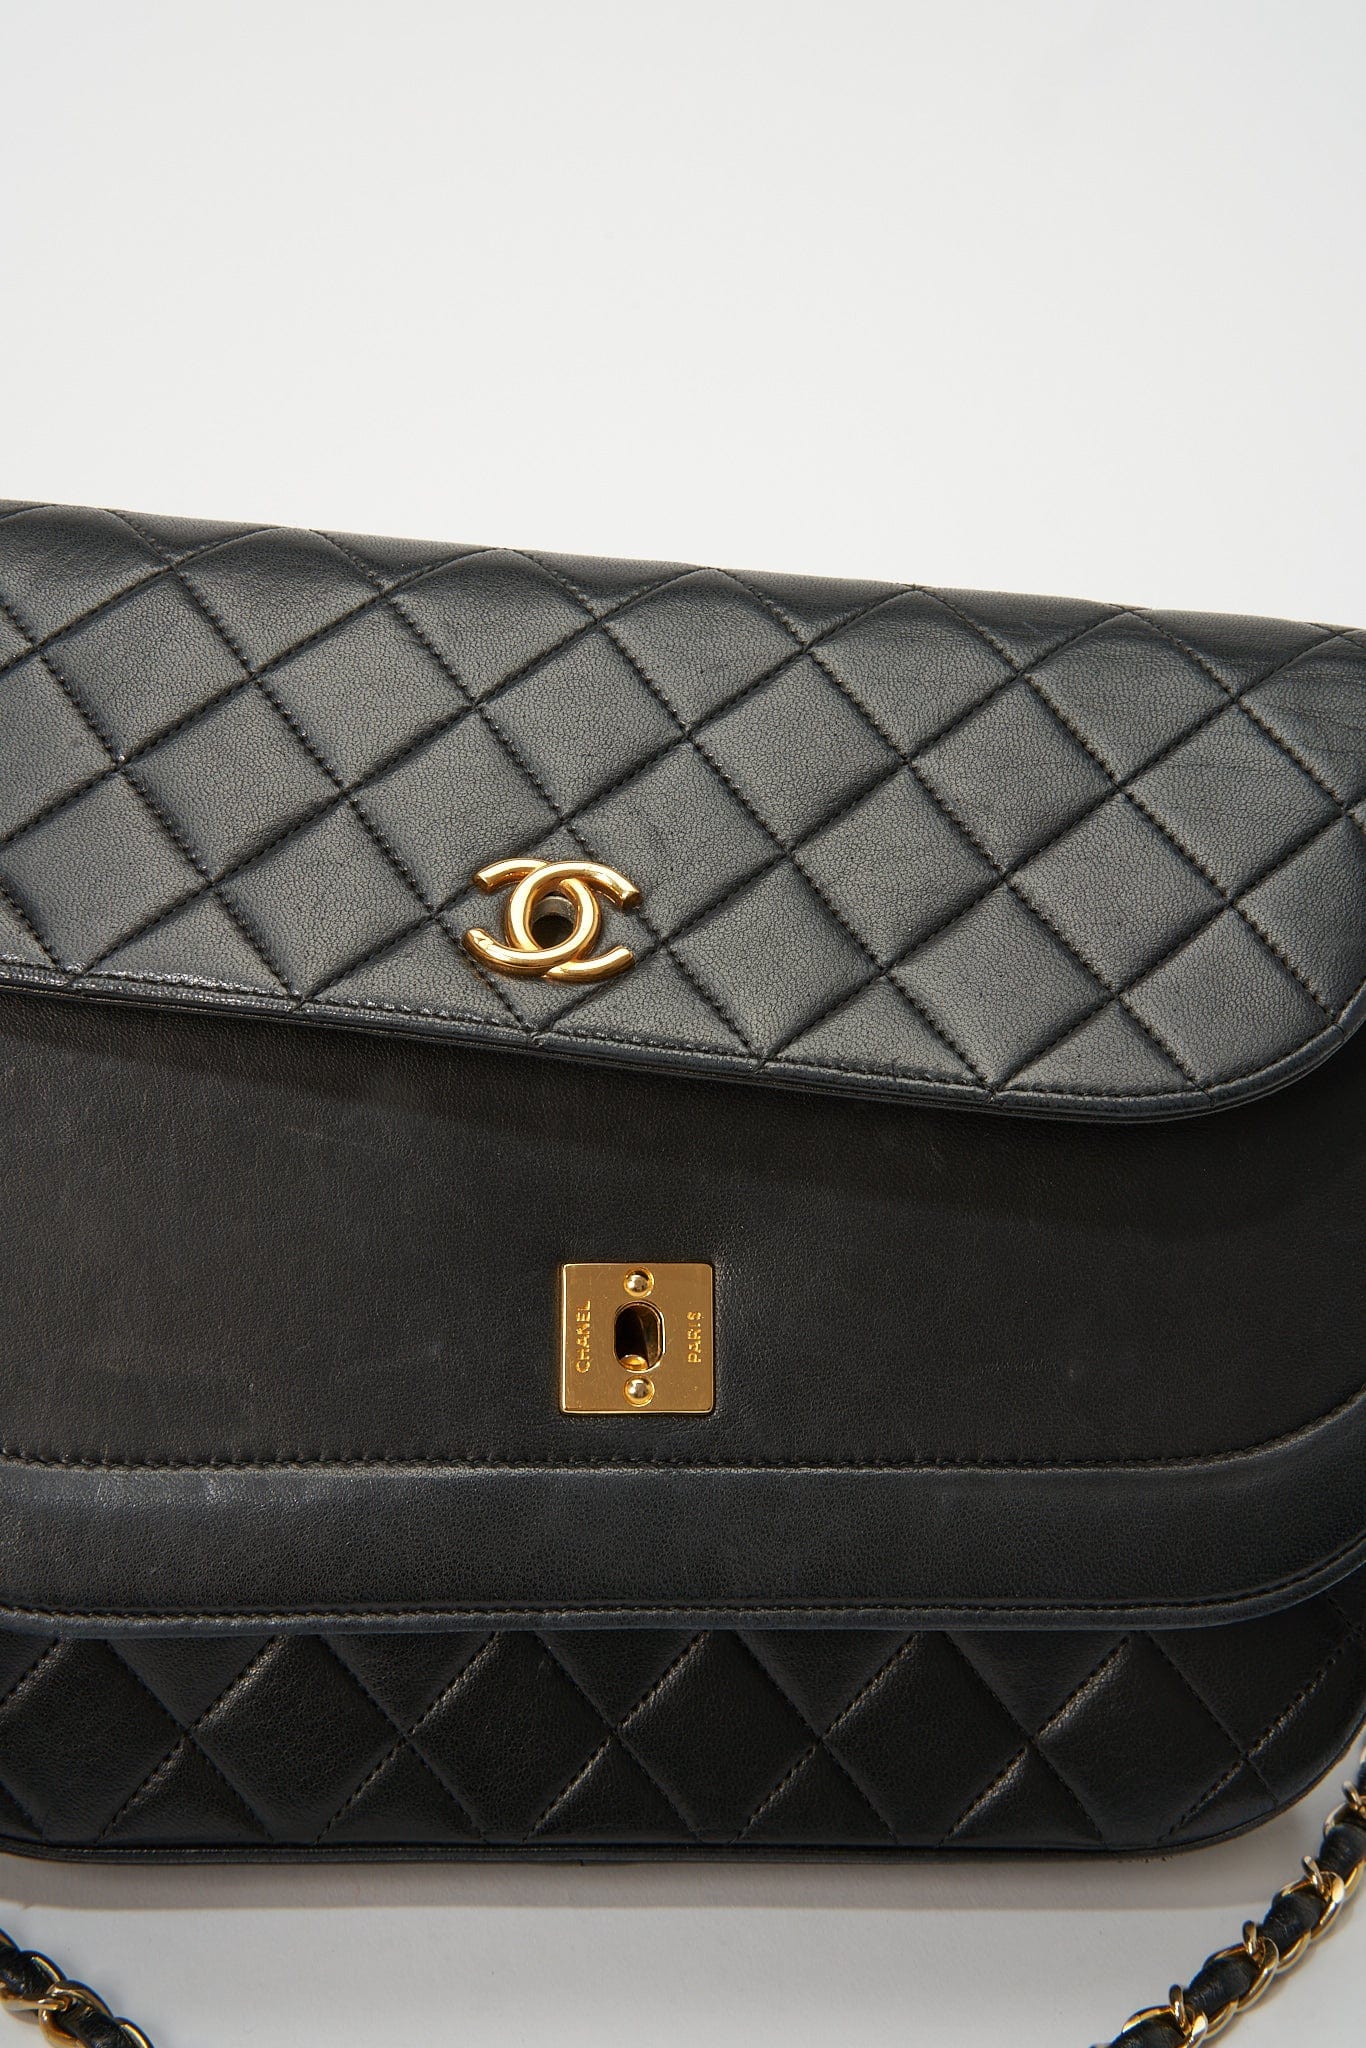 Chanel Black Lambskin Soft Flap Ritz Bag Large PHW - AGL1472